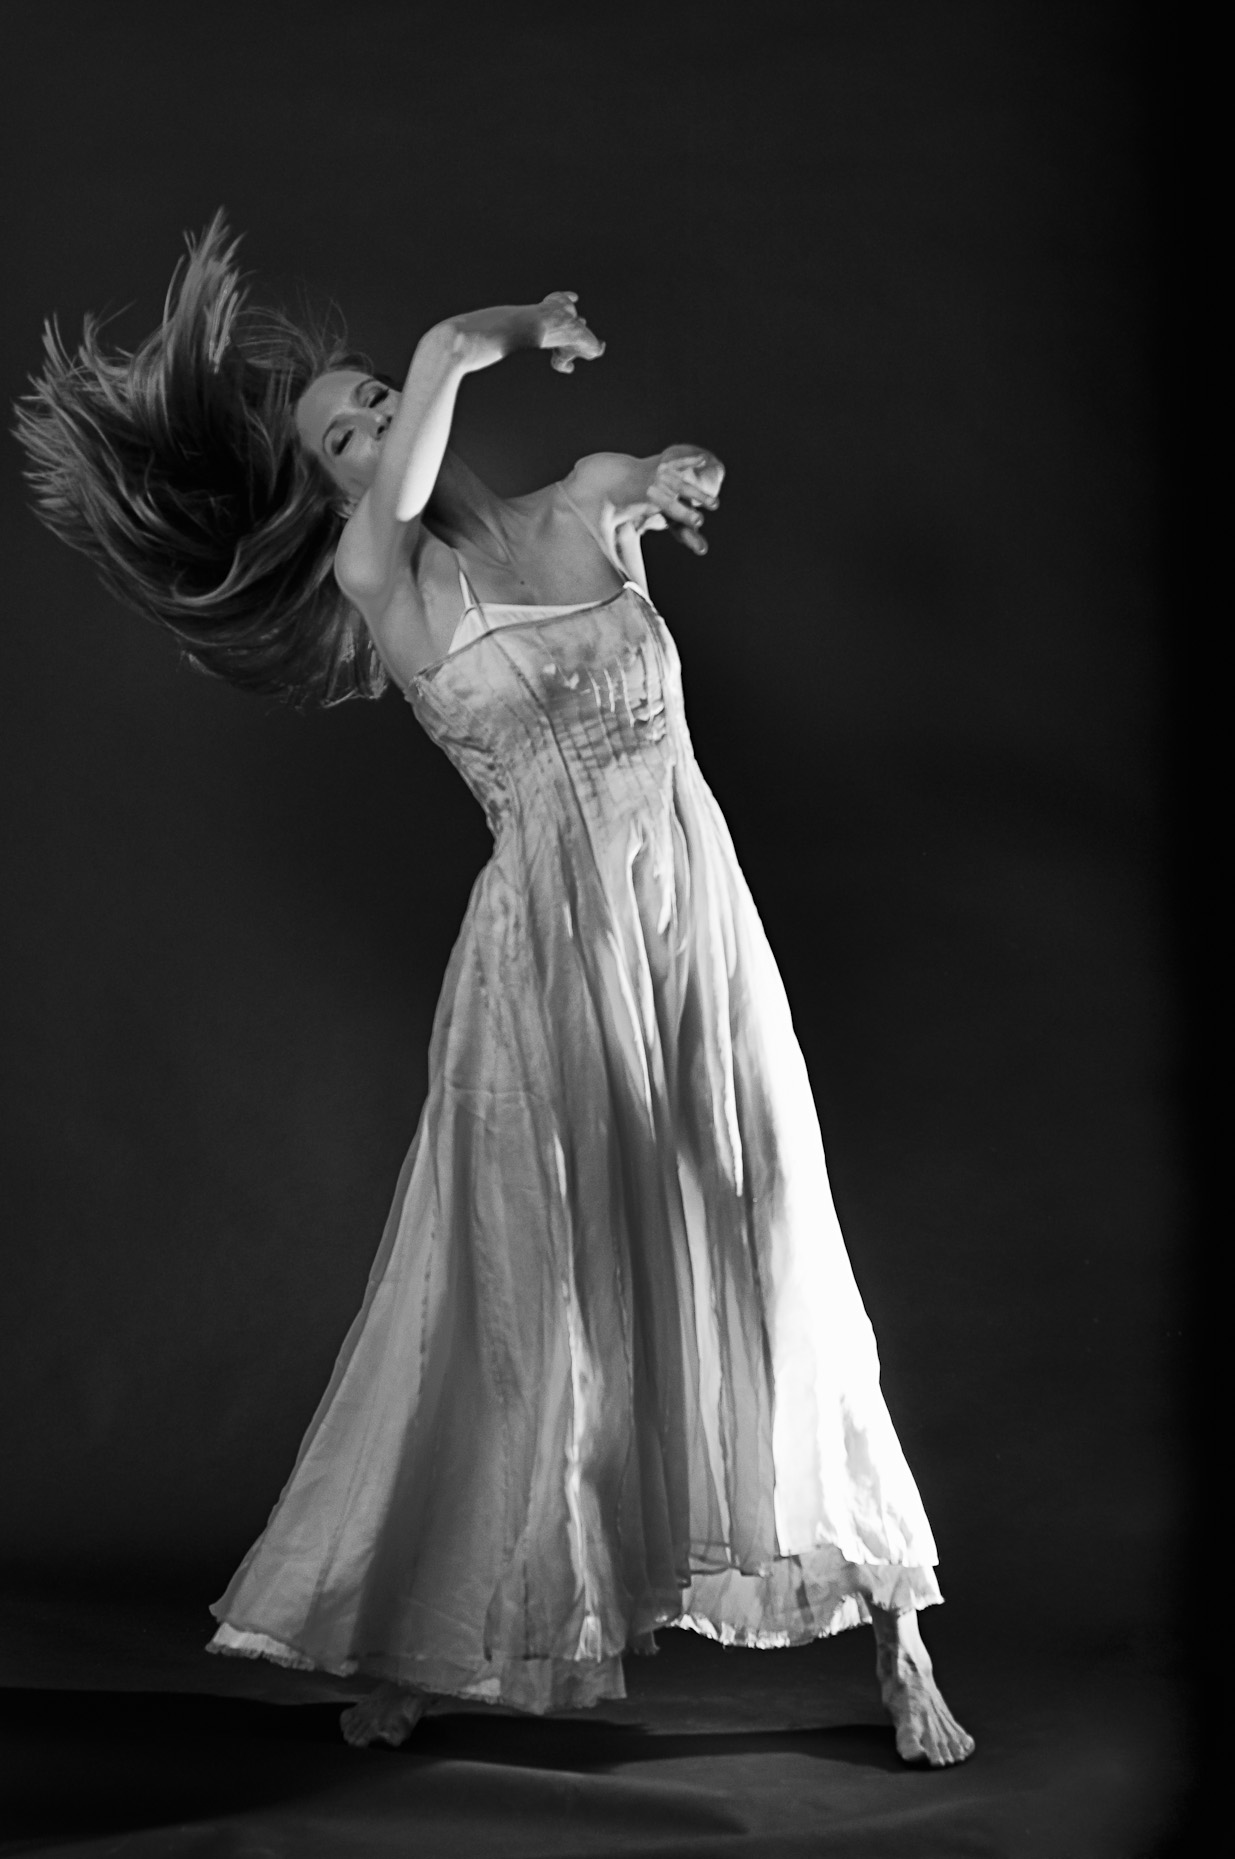 Dance-Photos-Dance-Awake-7-Laria-Saunders-.jpg